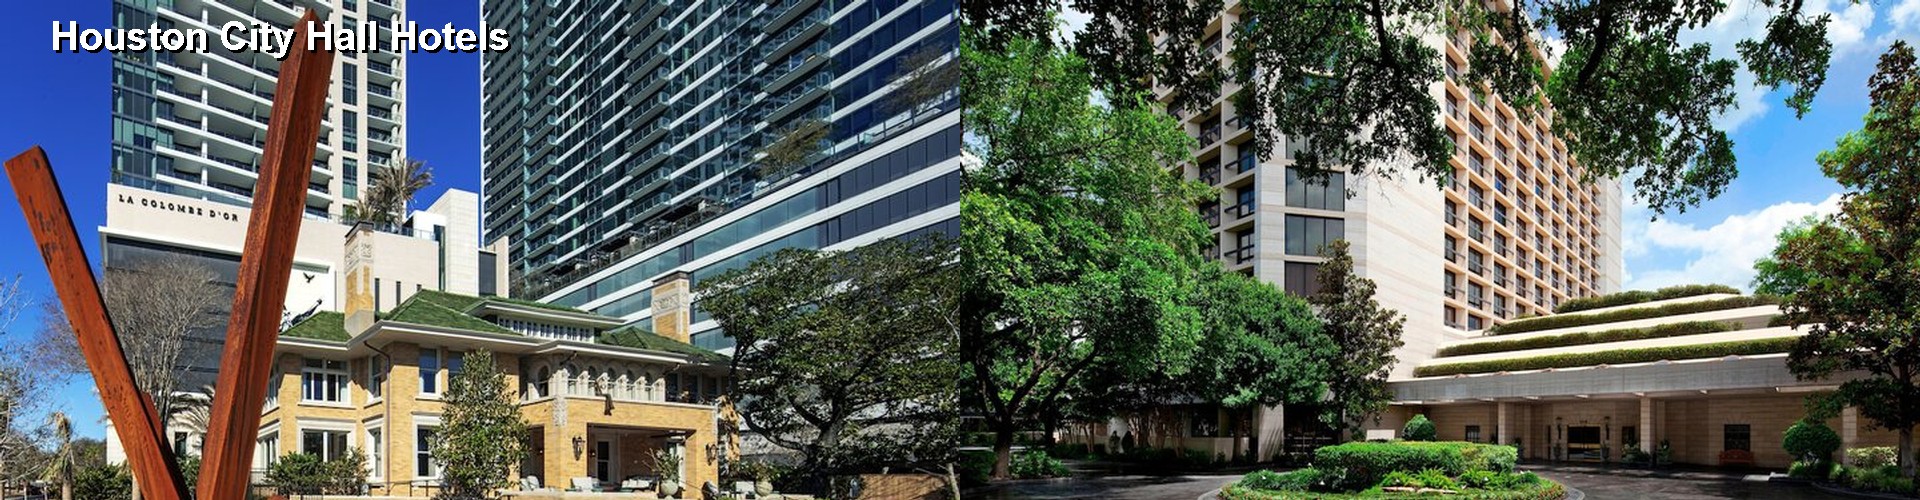 5 Best Hotels near Houston City Hall